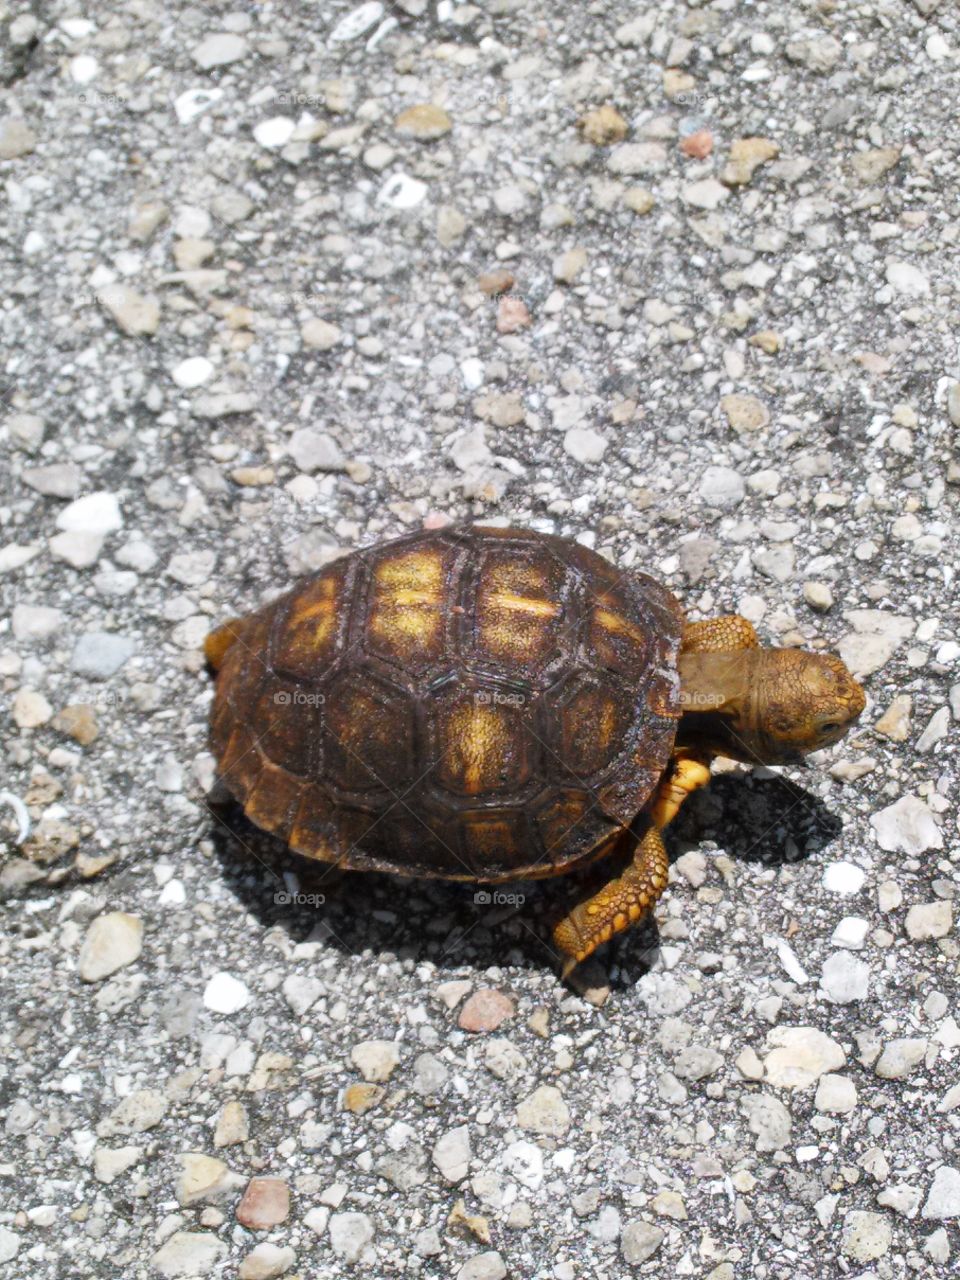 Wild Tortoise crossing the street